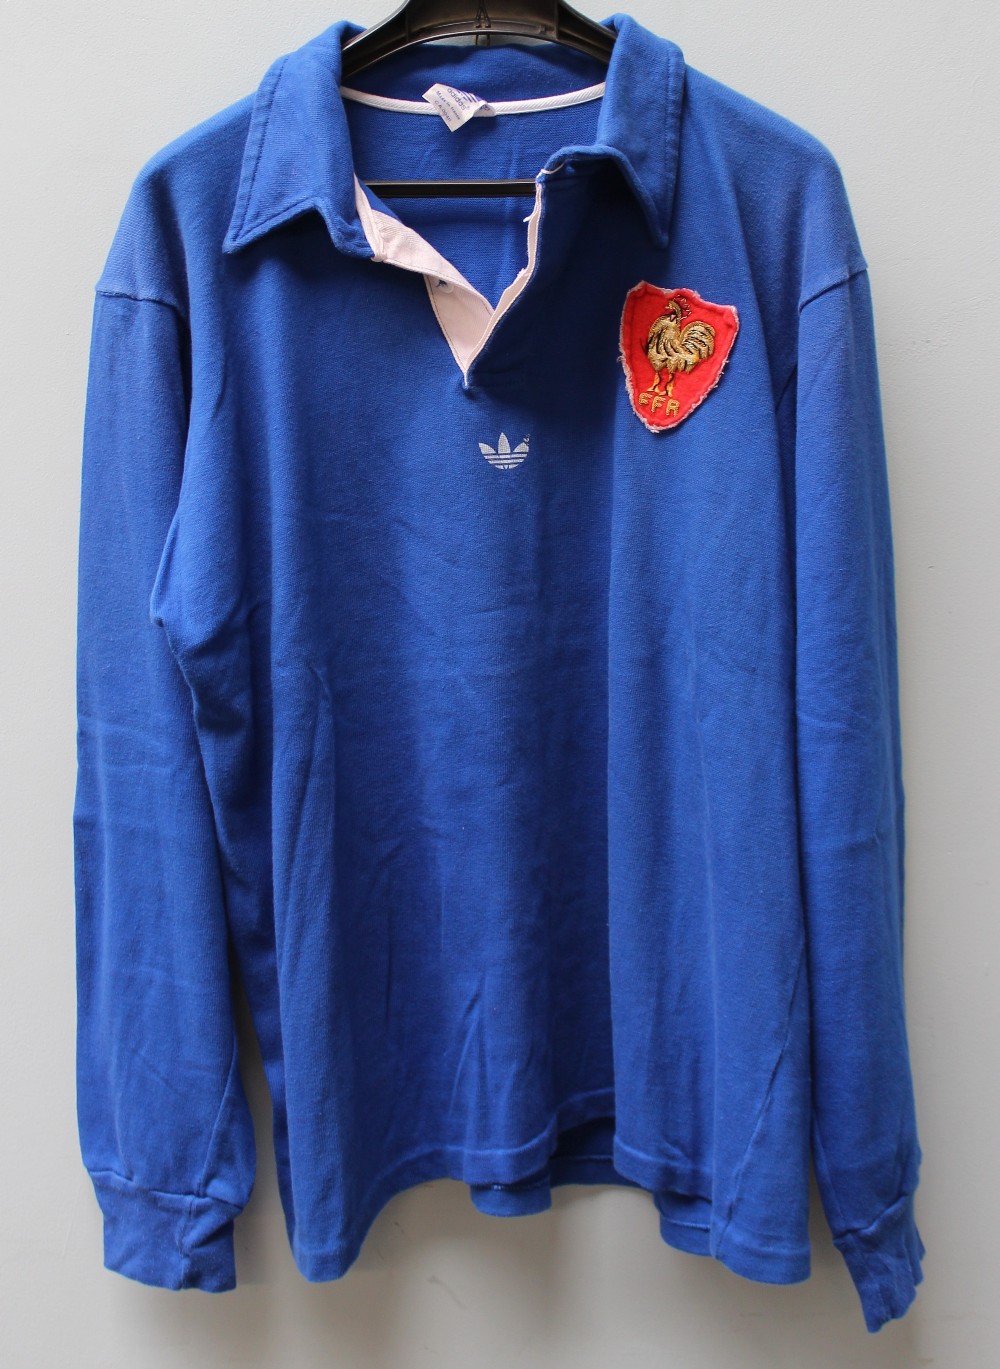 Allan Martin - A blue French International match worn jersey, - Image 2 of 3